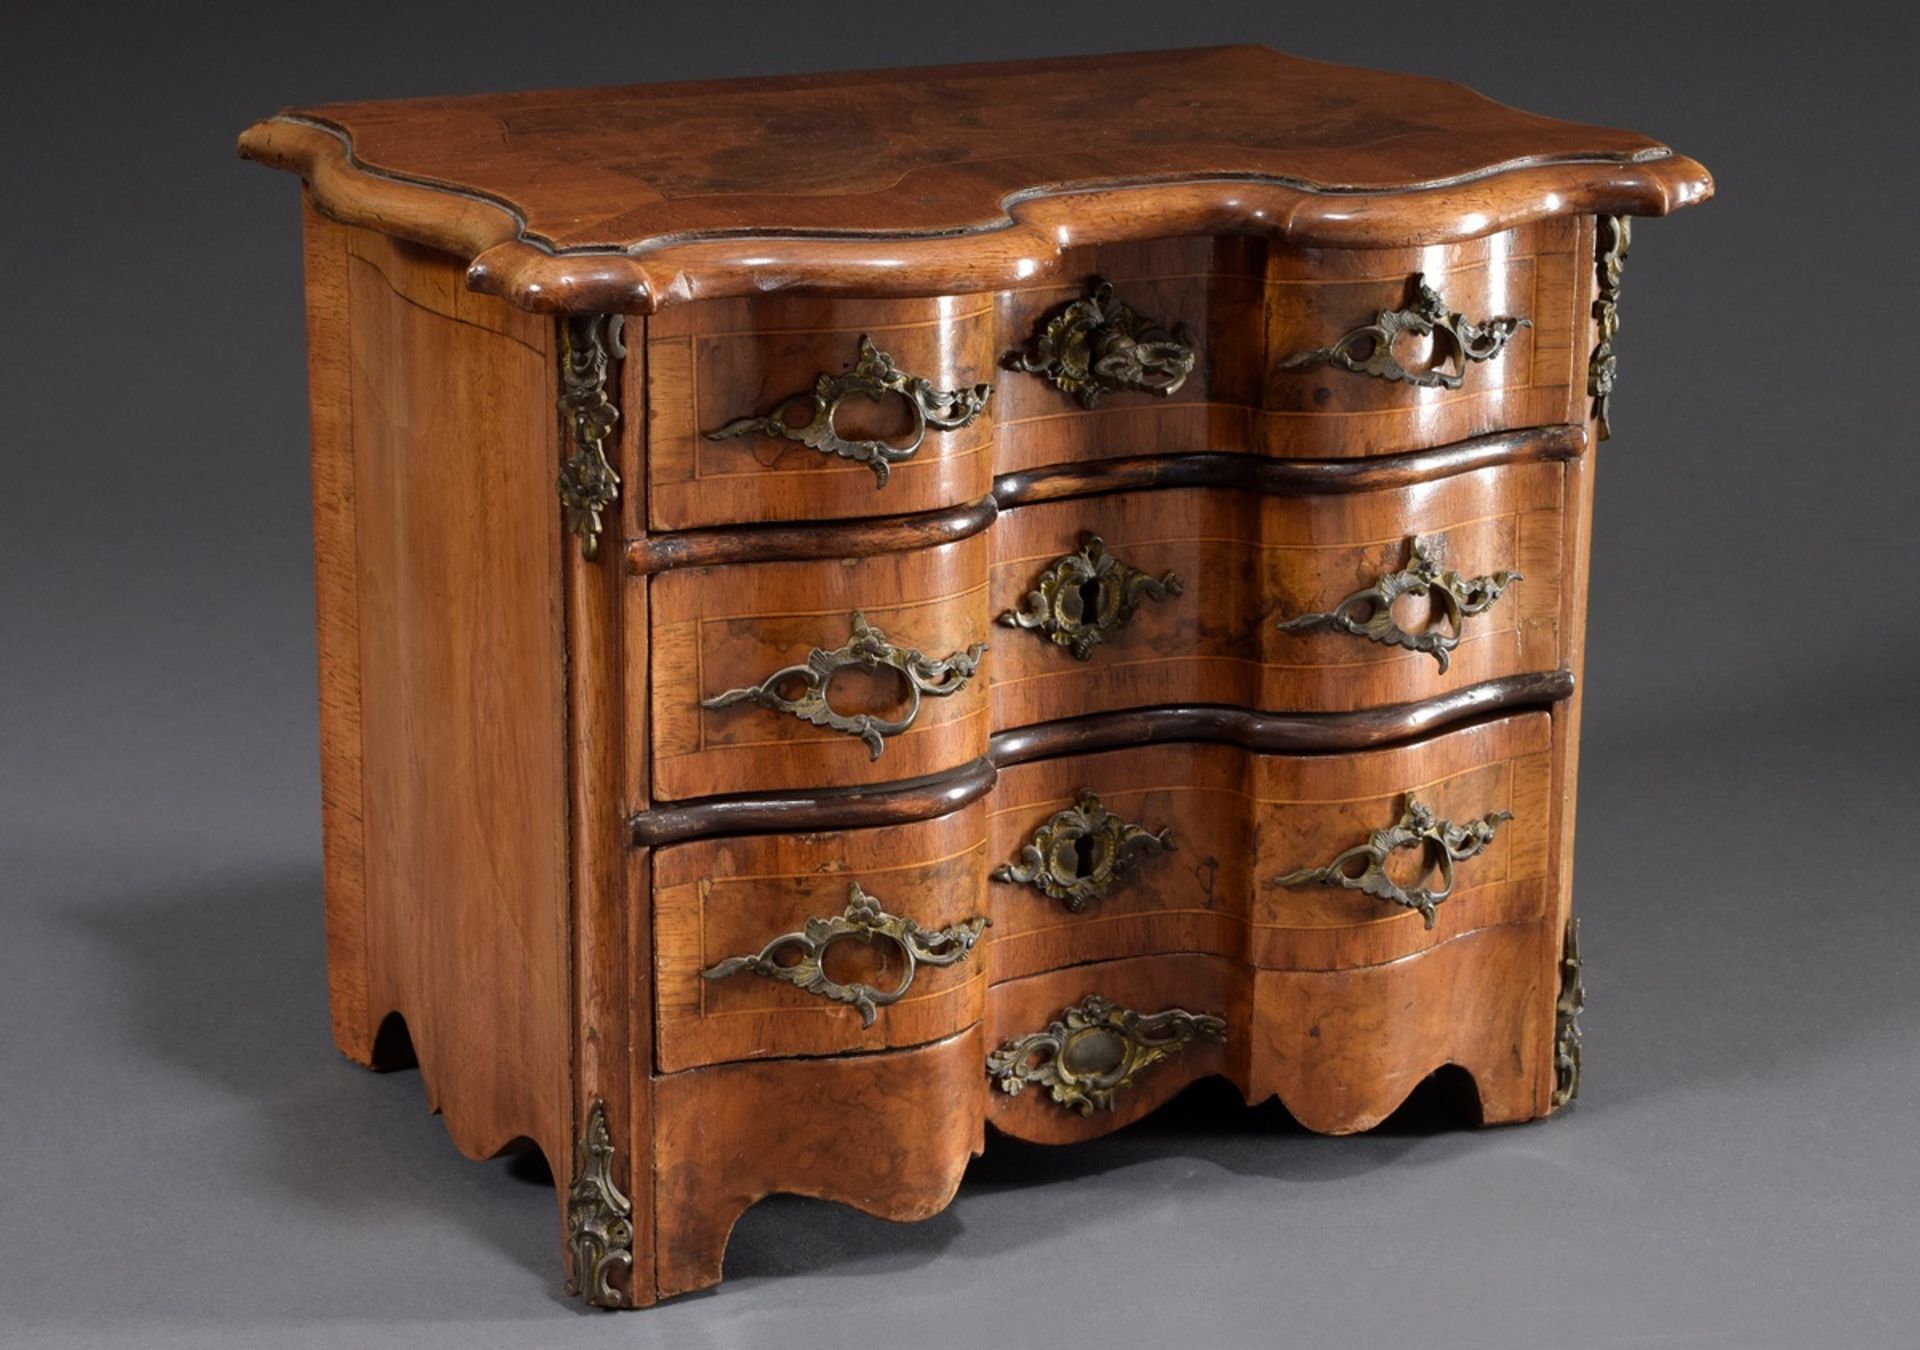 Historismus Modellkommode mit zweifach geschweif | Historicism model chest of drawers with double c